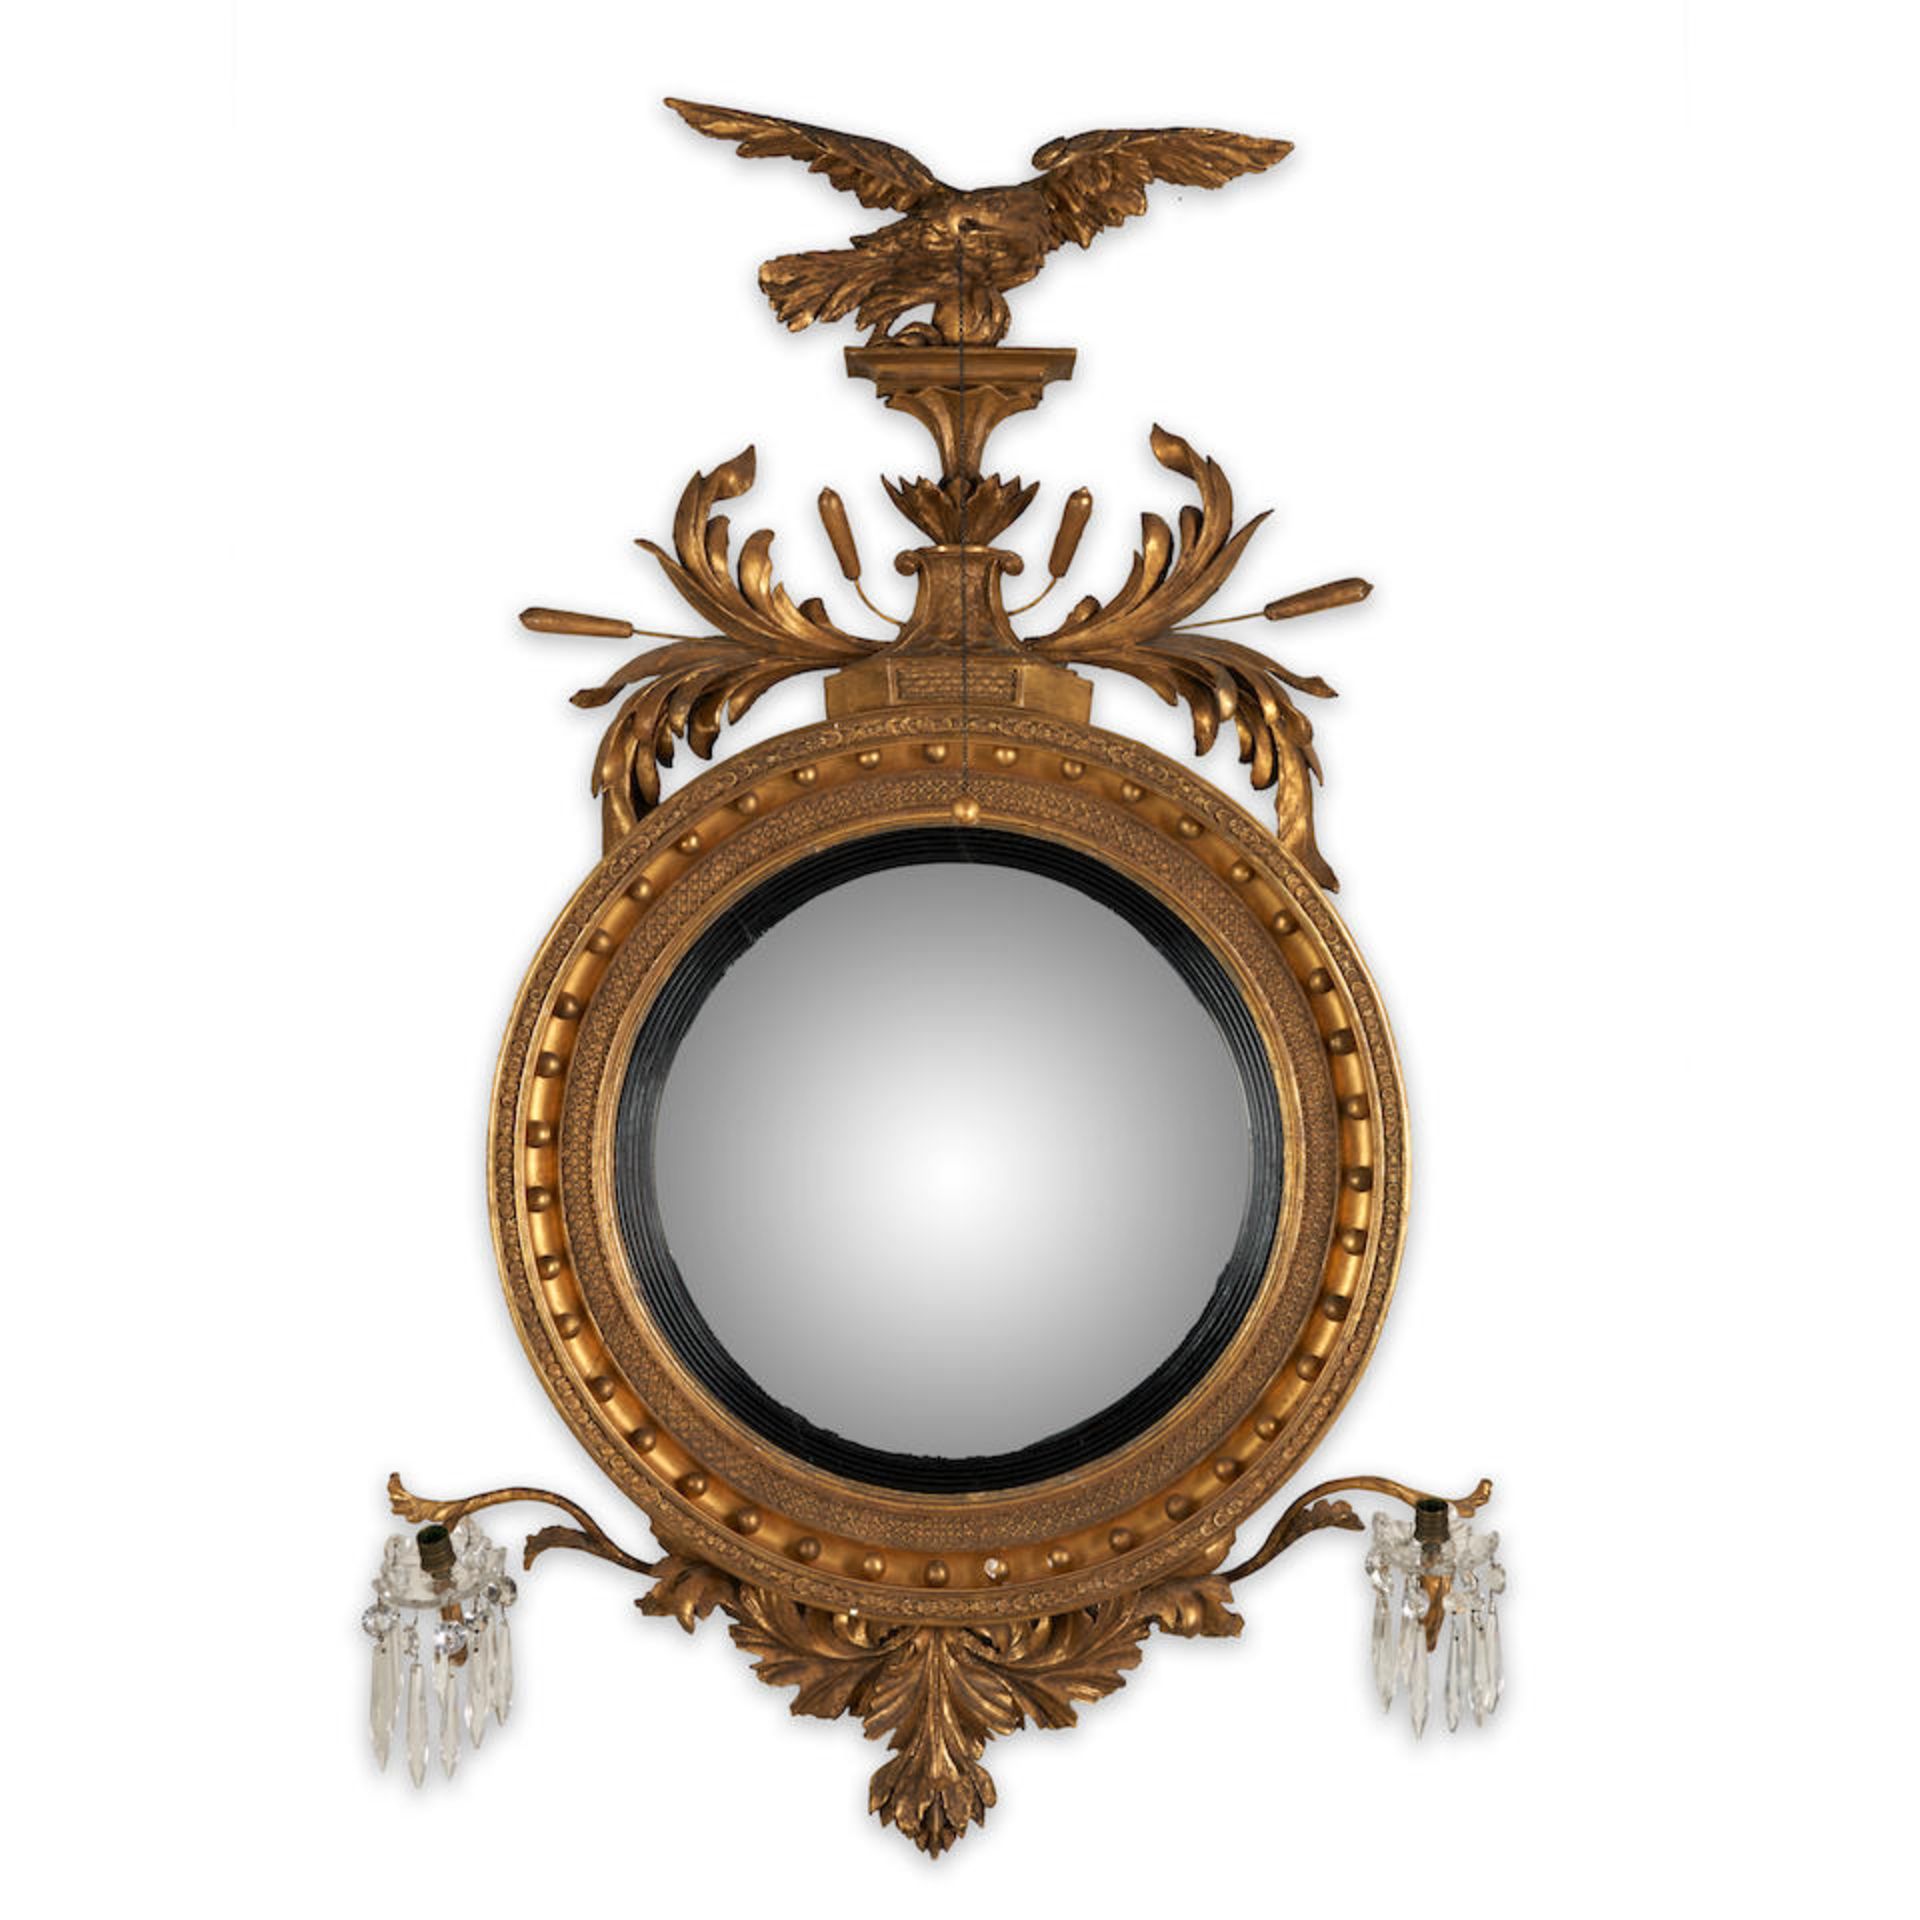 Regency Giltwood Girandole Mirror, England, early 19th century.